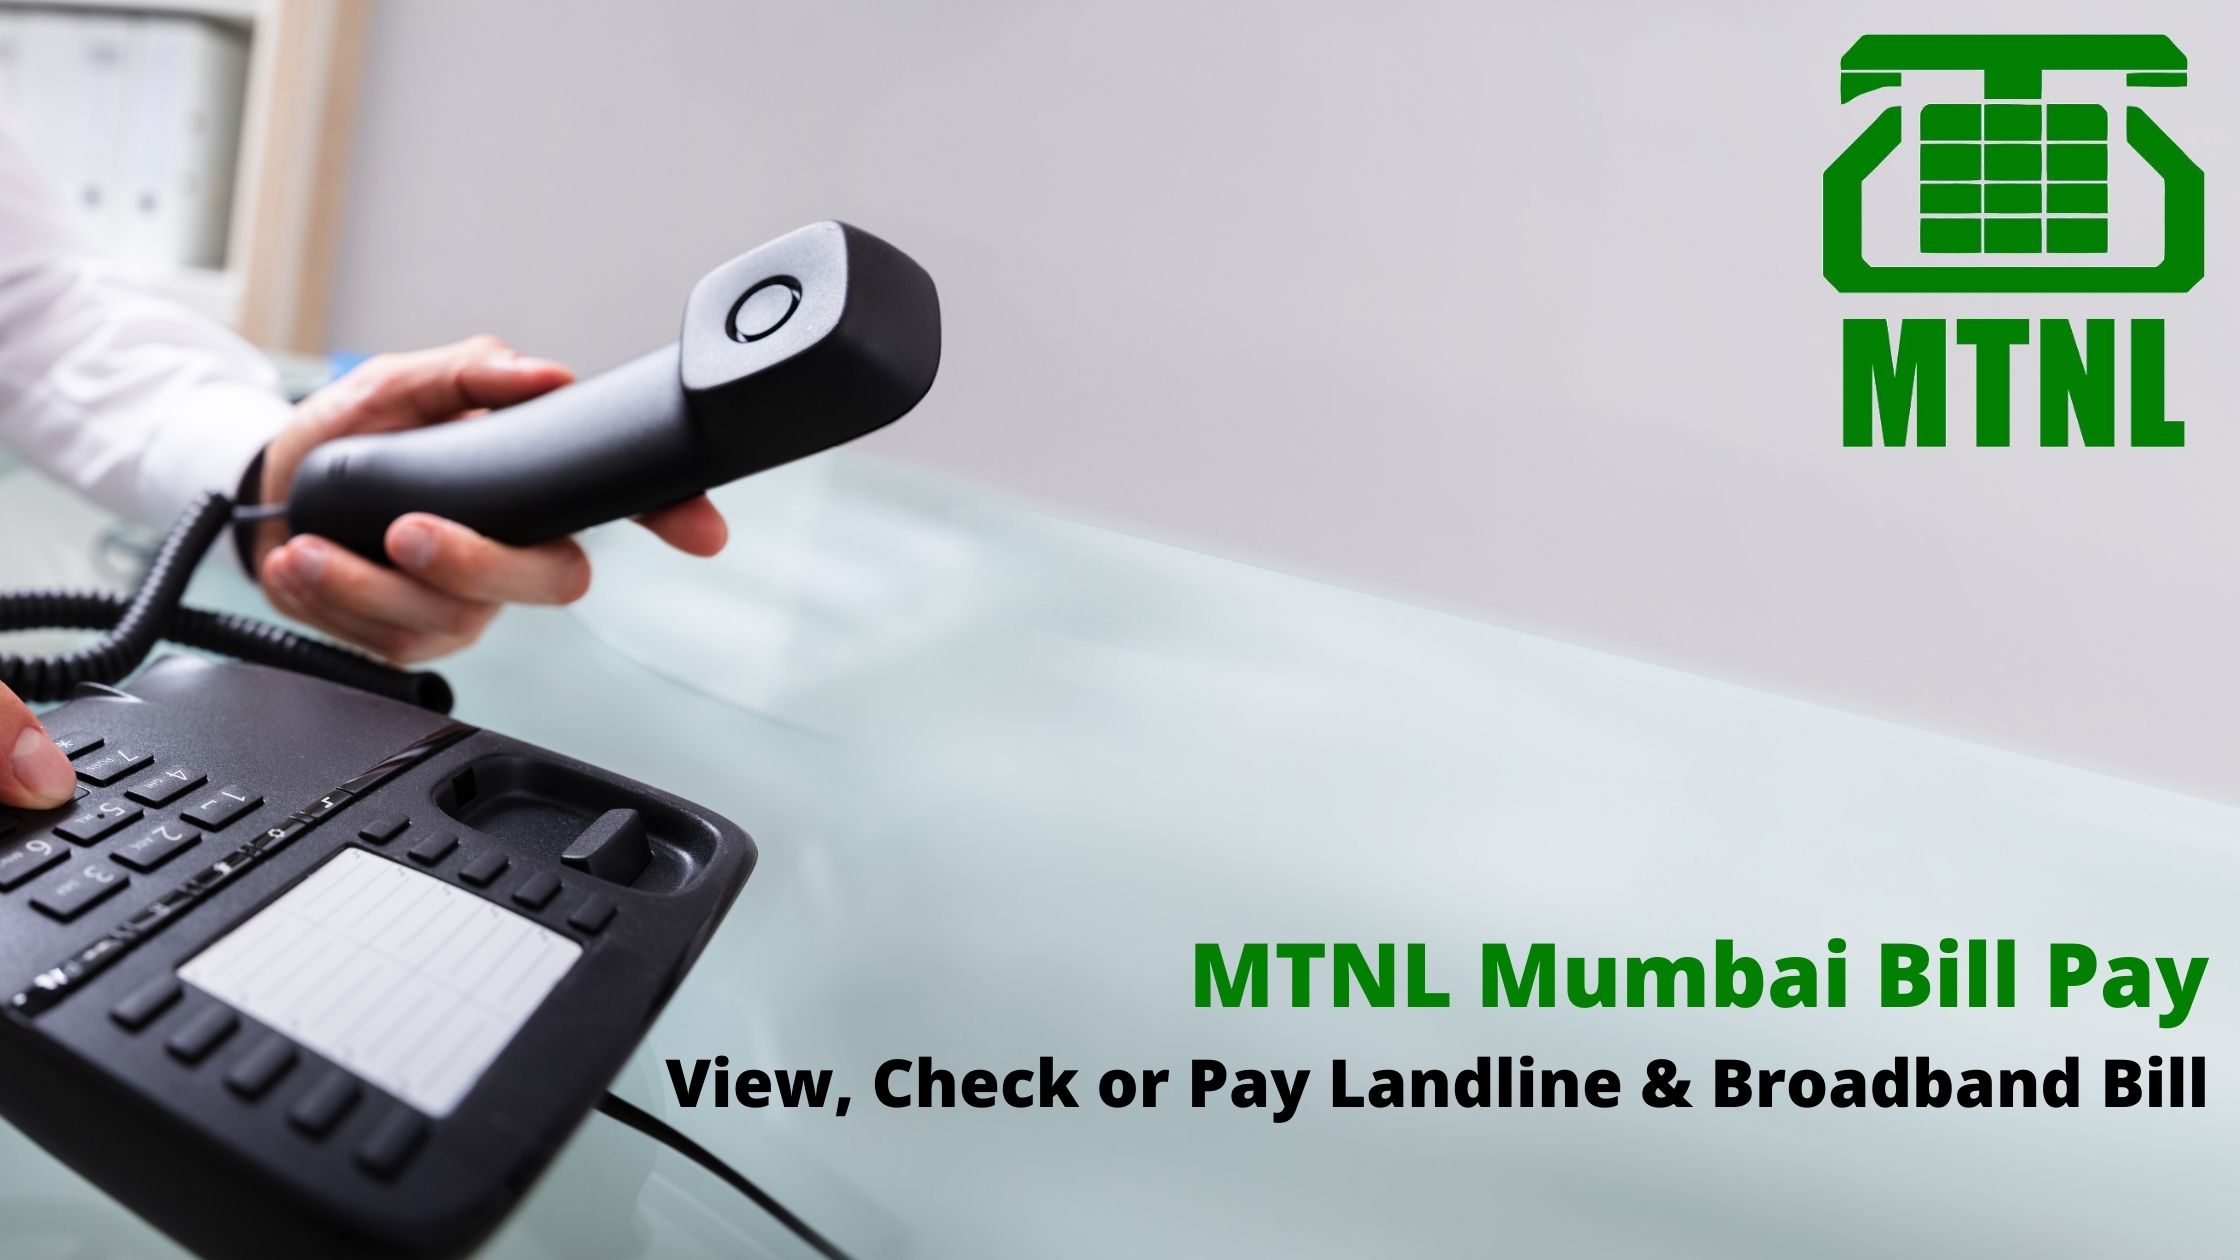  MTNL Mumbai Bill Payment: View, Check or Pay Landline & Broadband Bill